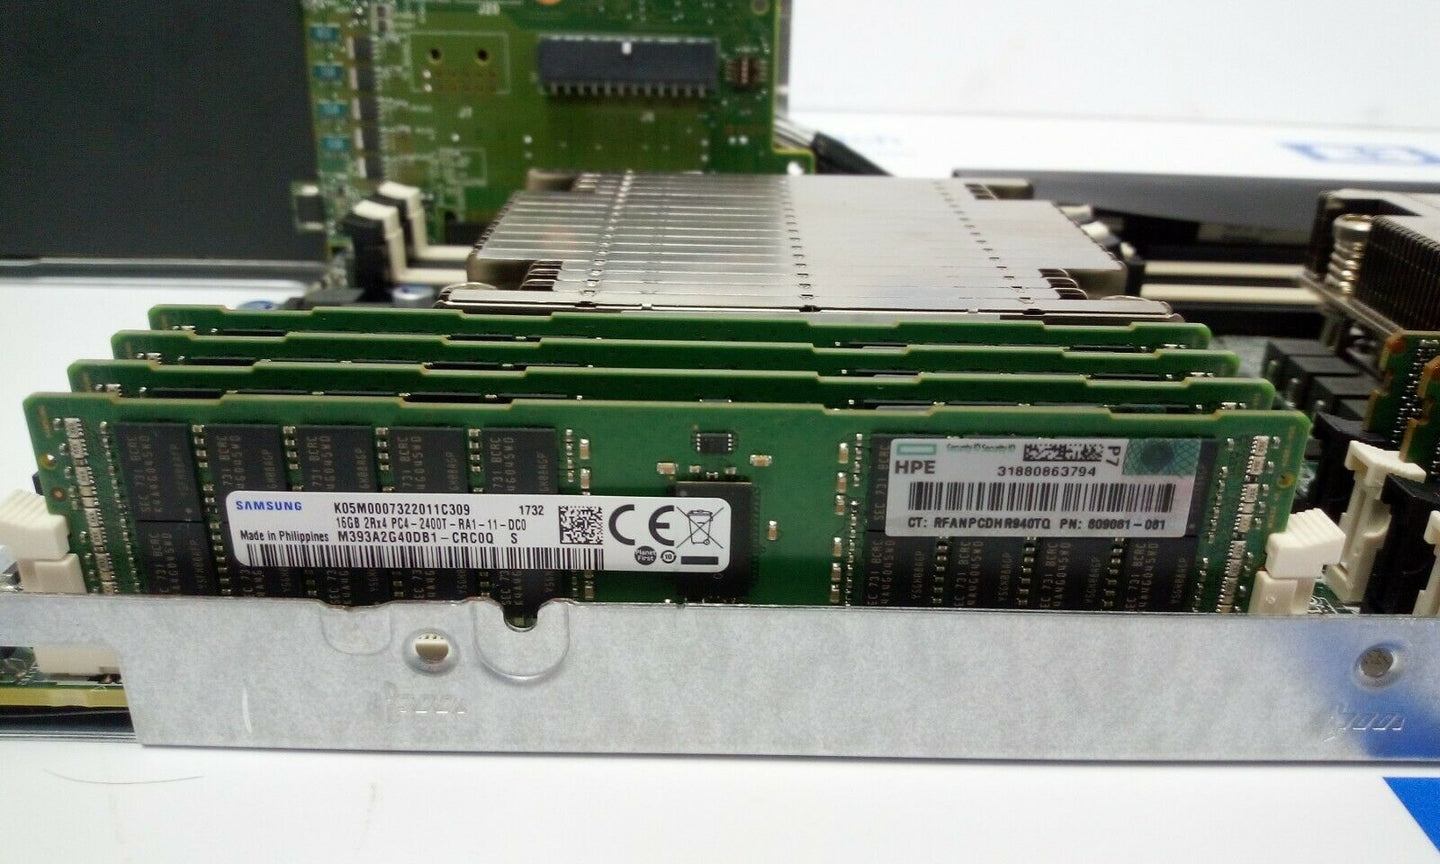 HPE 809081-081 - 16GB PC4-19200T-R (DDR4-2400Mhz, 2RX4) ECC REG Server Memory